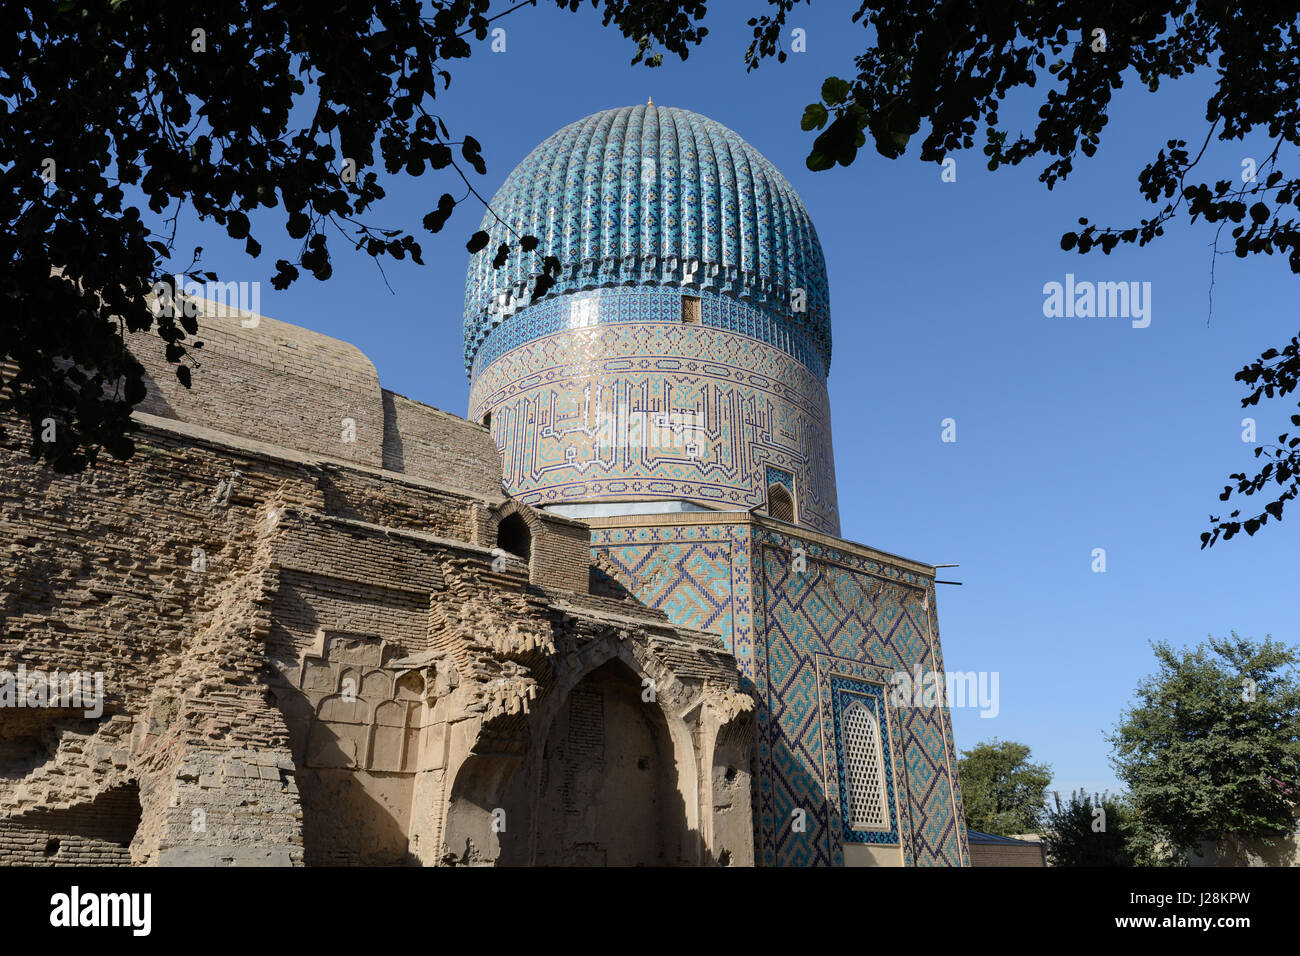 Uzbekistan, Samarkand province, Samarkand, The Gur Emir mausoleum in the Uzbek city of Samarkand is the tomb of Timur Lenk Stock Photo